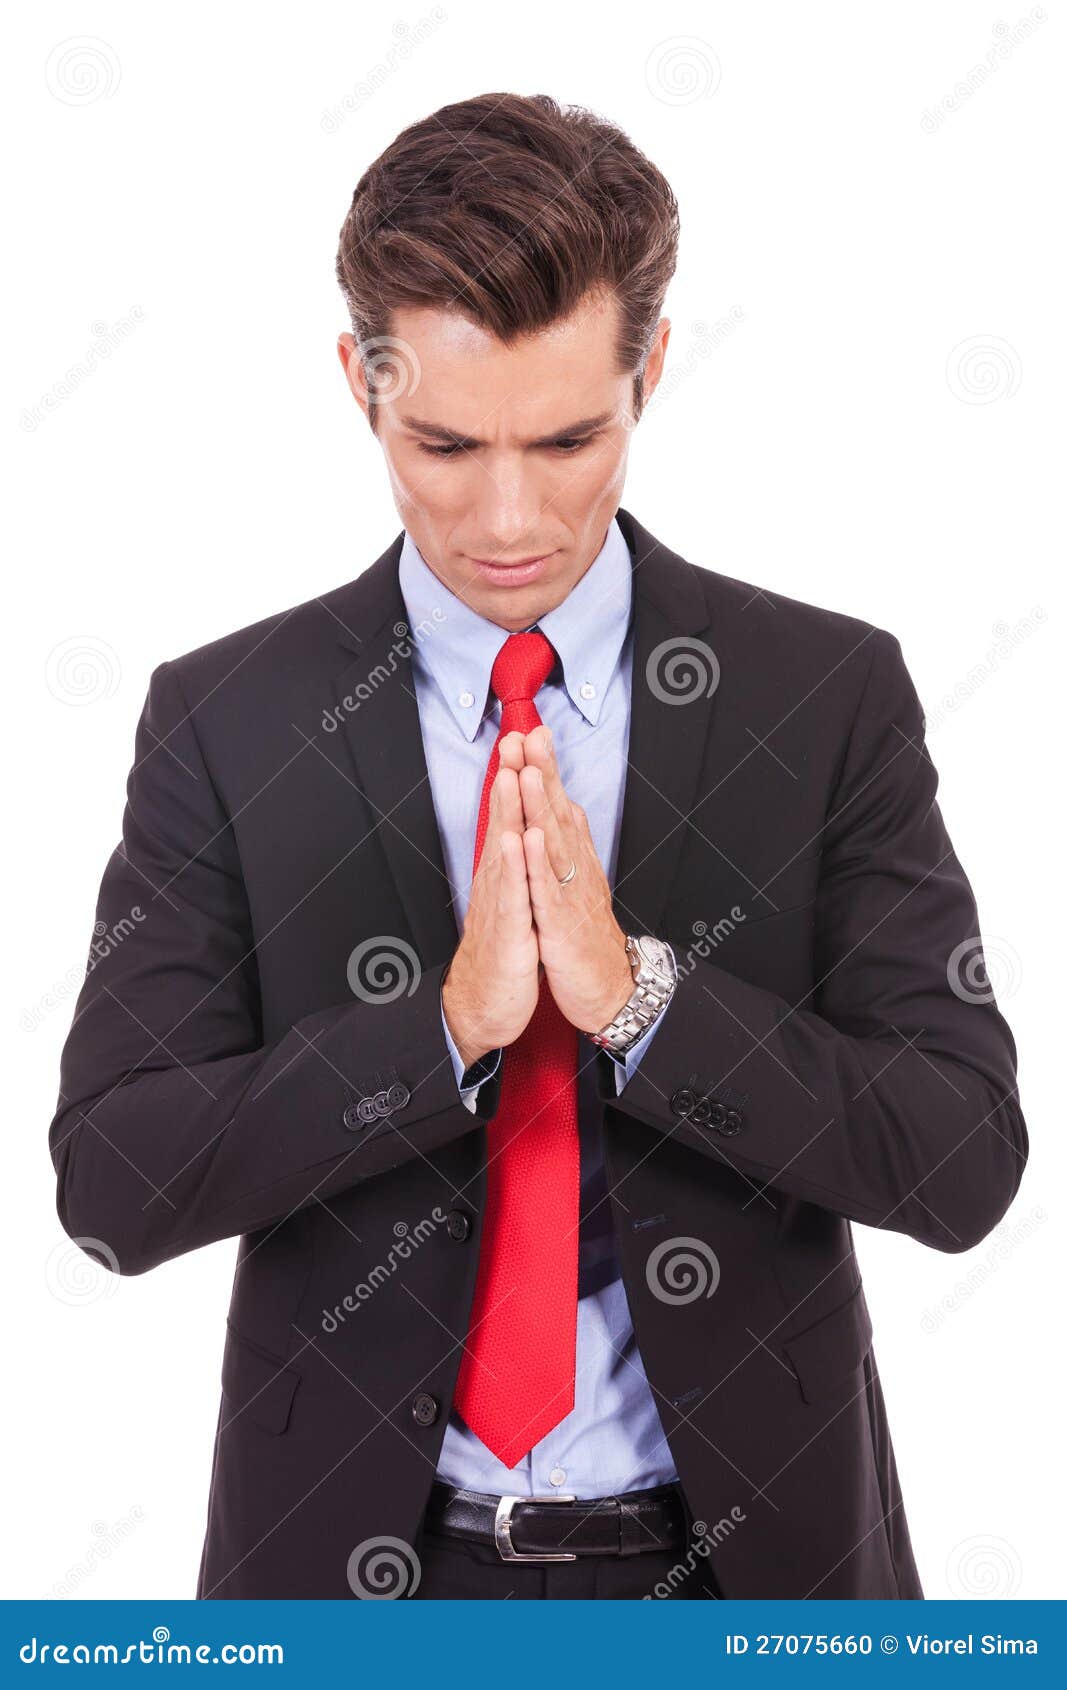 Young business man praying stock photo. Image of bank - 27075660